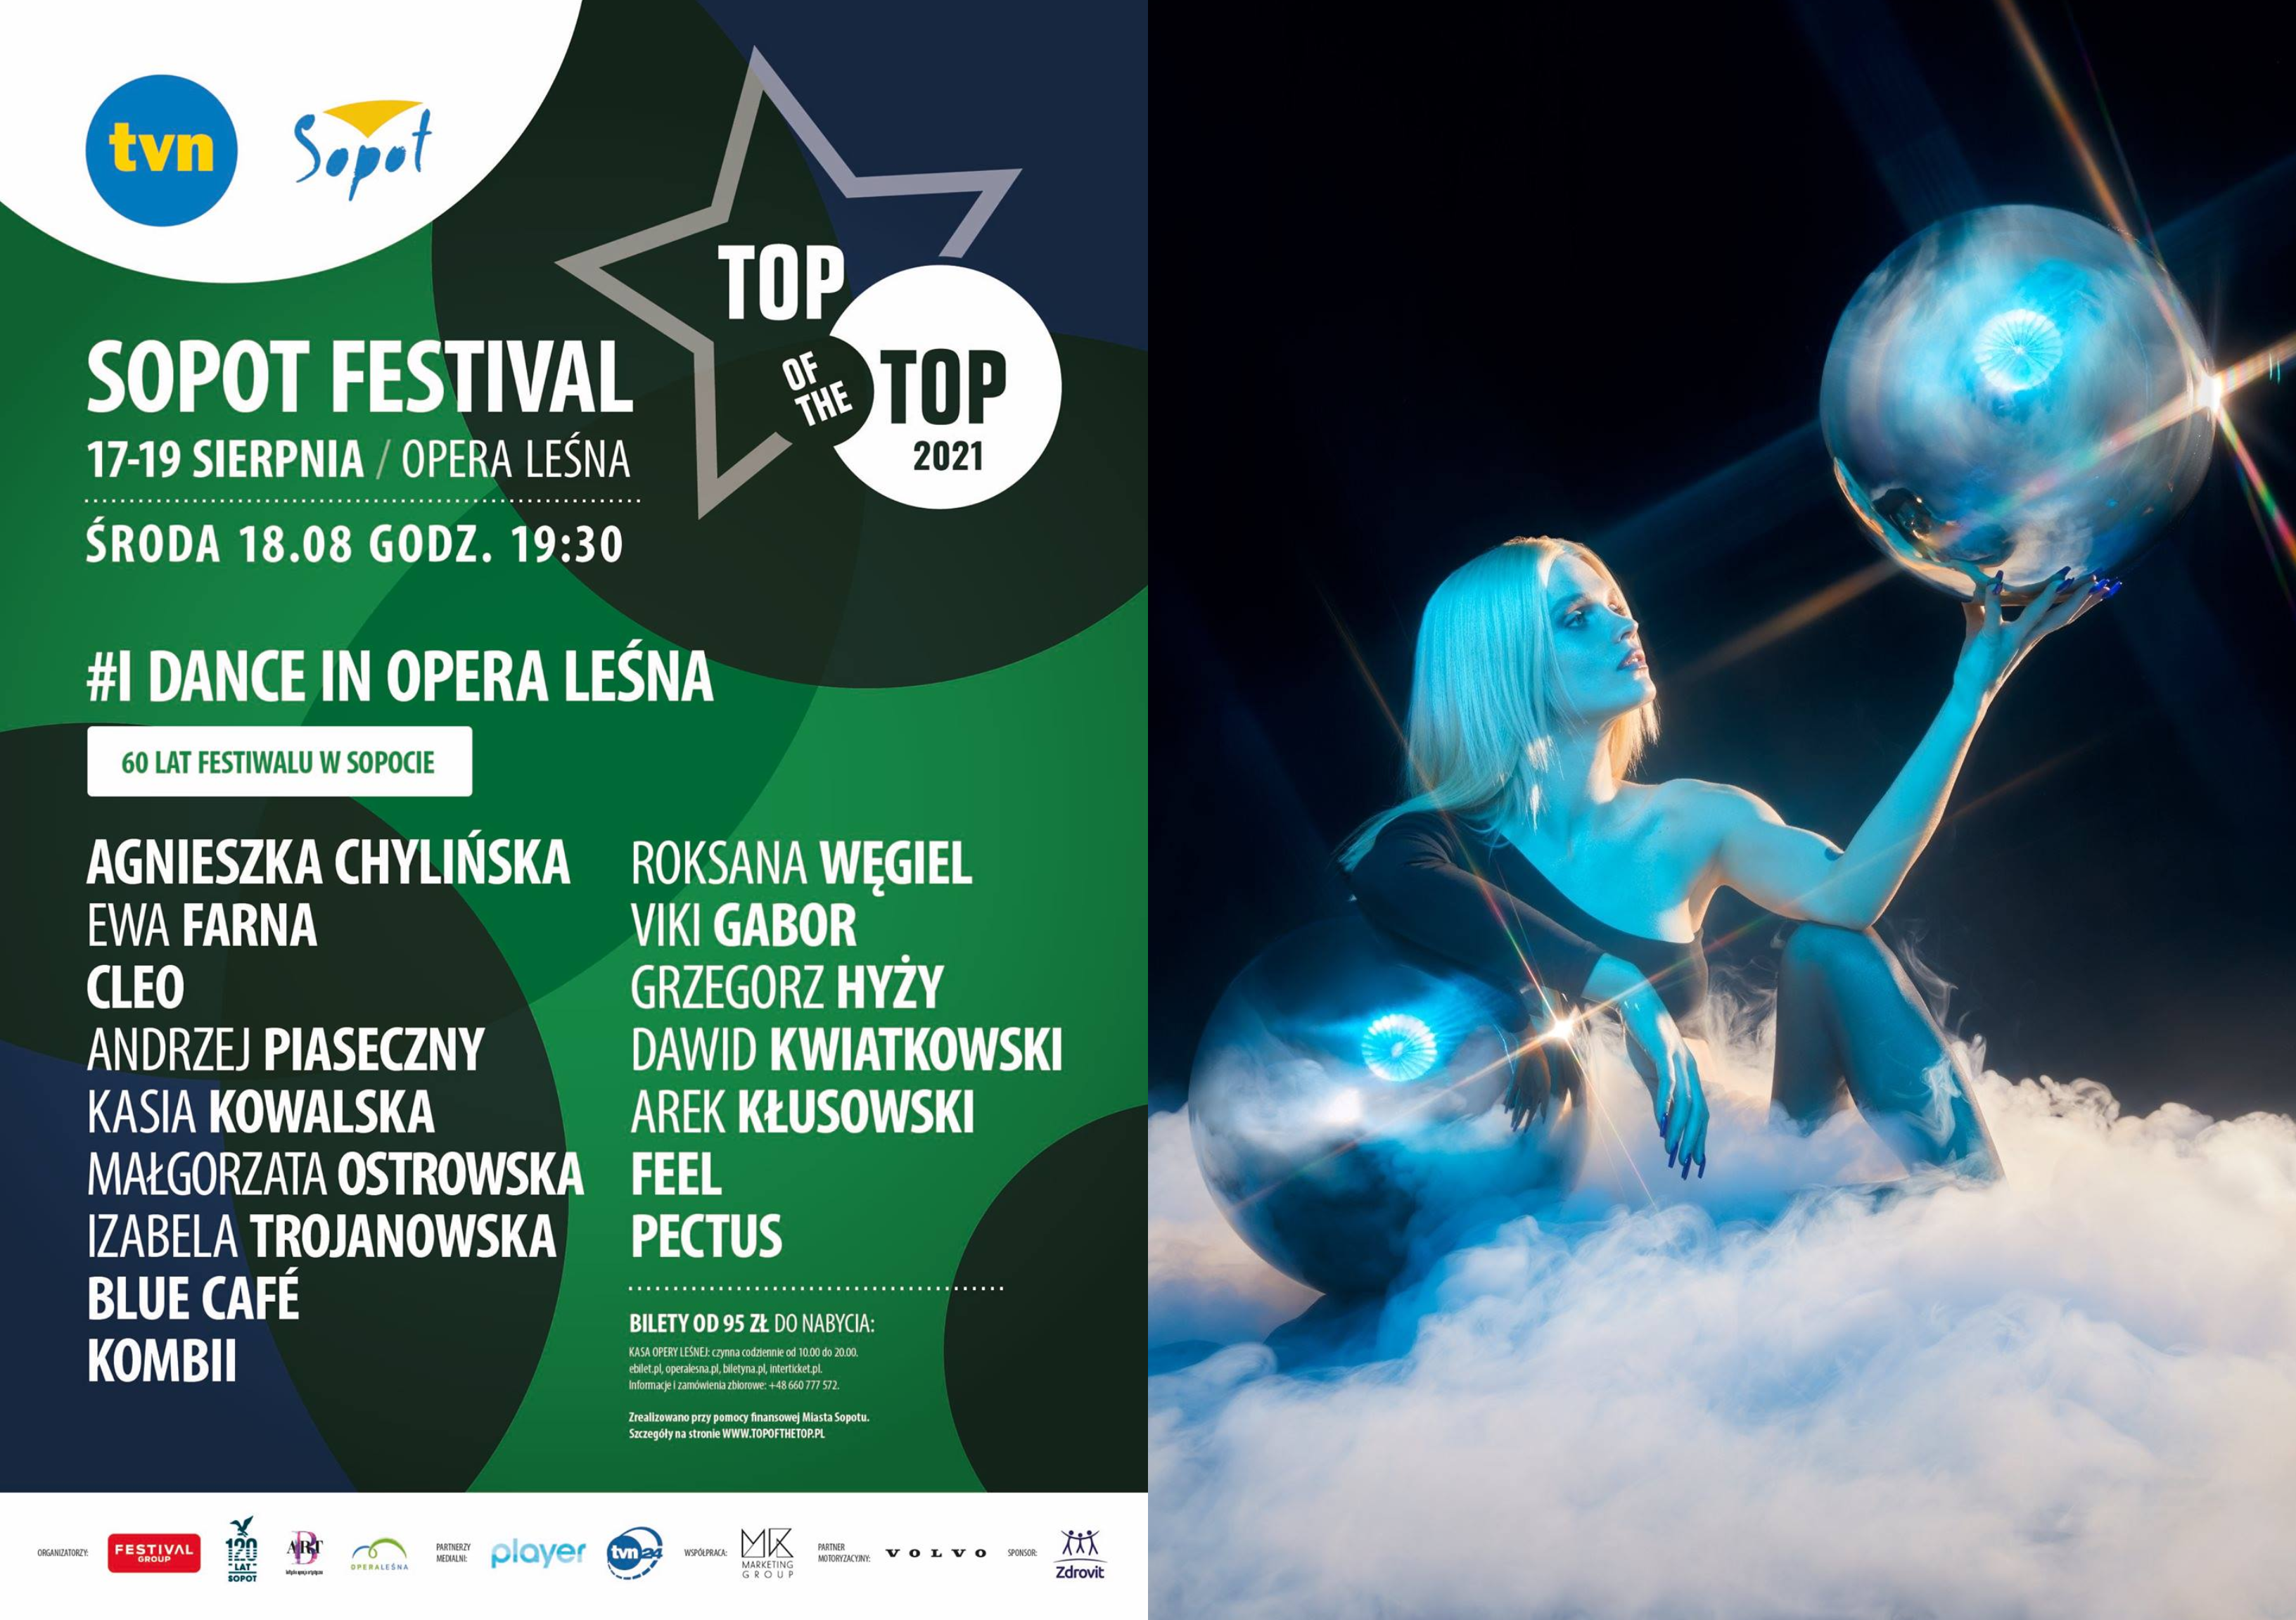 TOP OF THE TOP Sopot Festival 2021: Środa 18.08 o godz. 19:30: #I DANCE IN OPERA LEŚNA & #TOP OF THE TOP CHALLENGE / fot. Facebook.com (@SopotTopOfTheTopFestival)